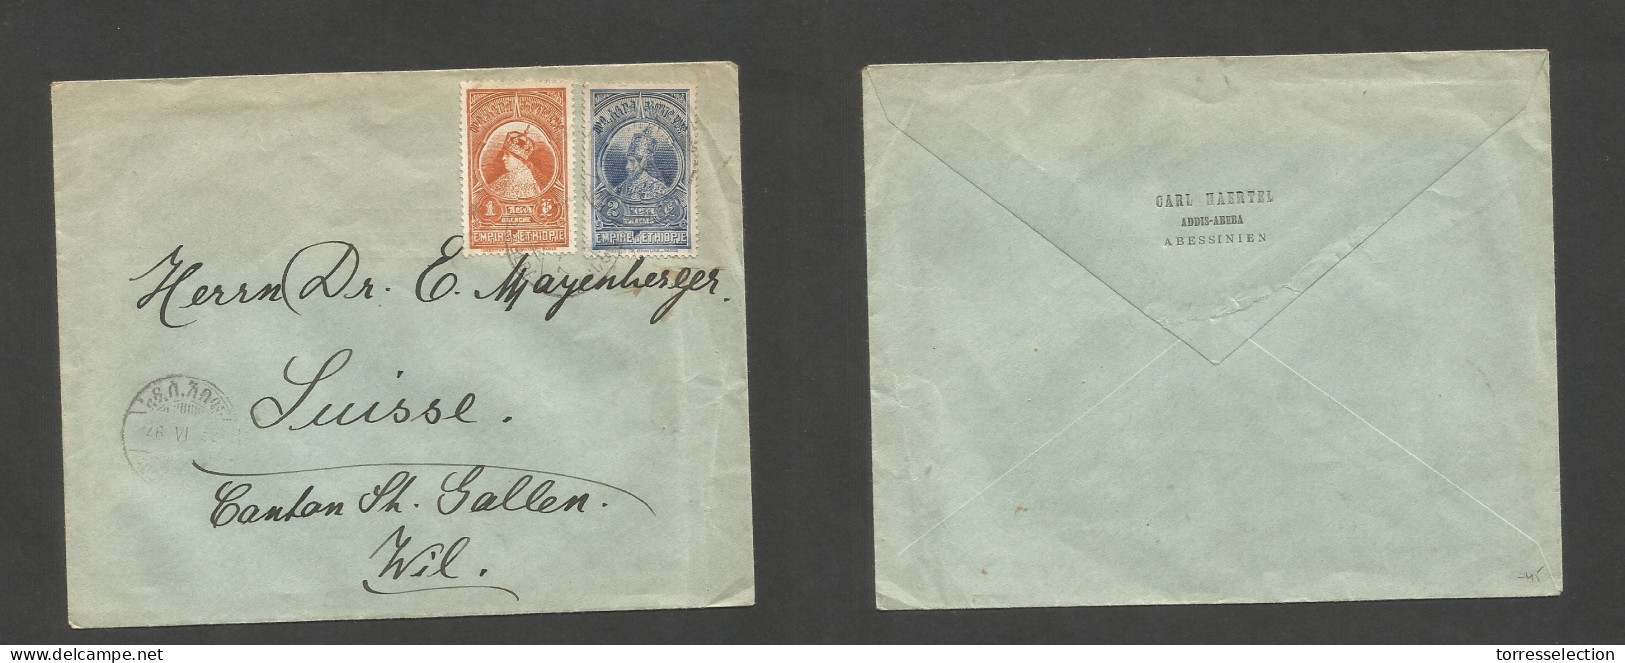 ETHIOPIA. 1932 (26 June) Addis Abeba - Switzerland, Will, St. Gullen. Multifkd Env At 3 Querches Rate, Tied Cds. Reverse - Ethiopie